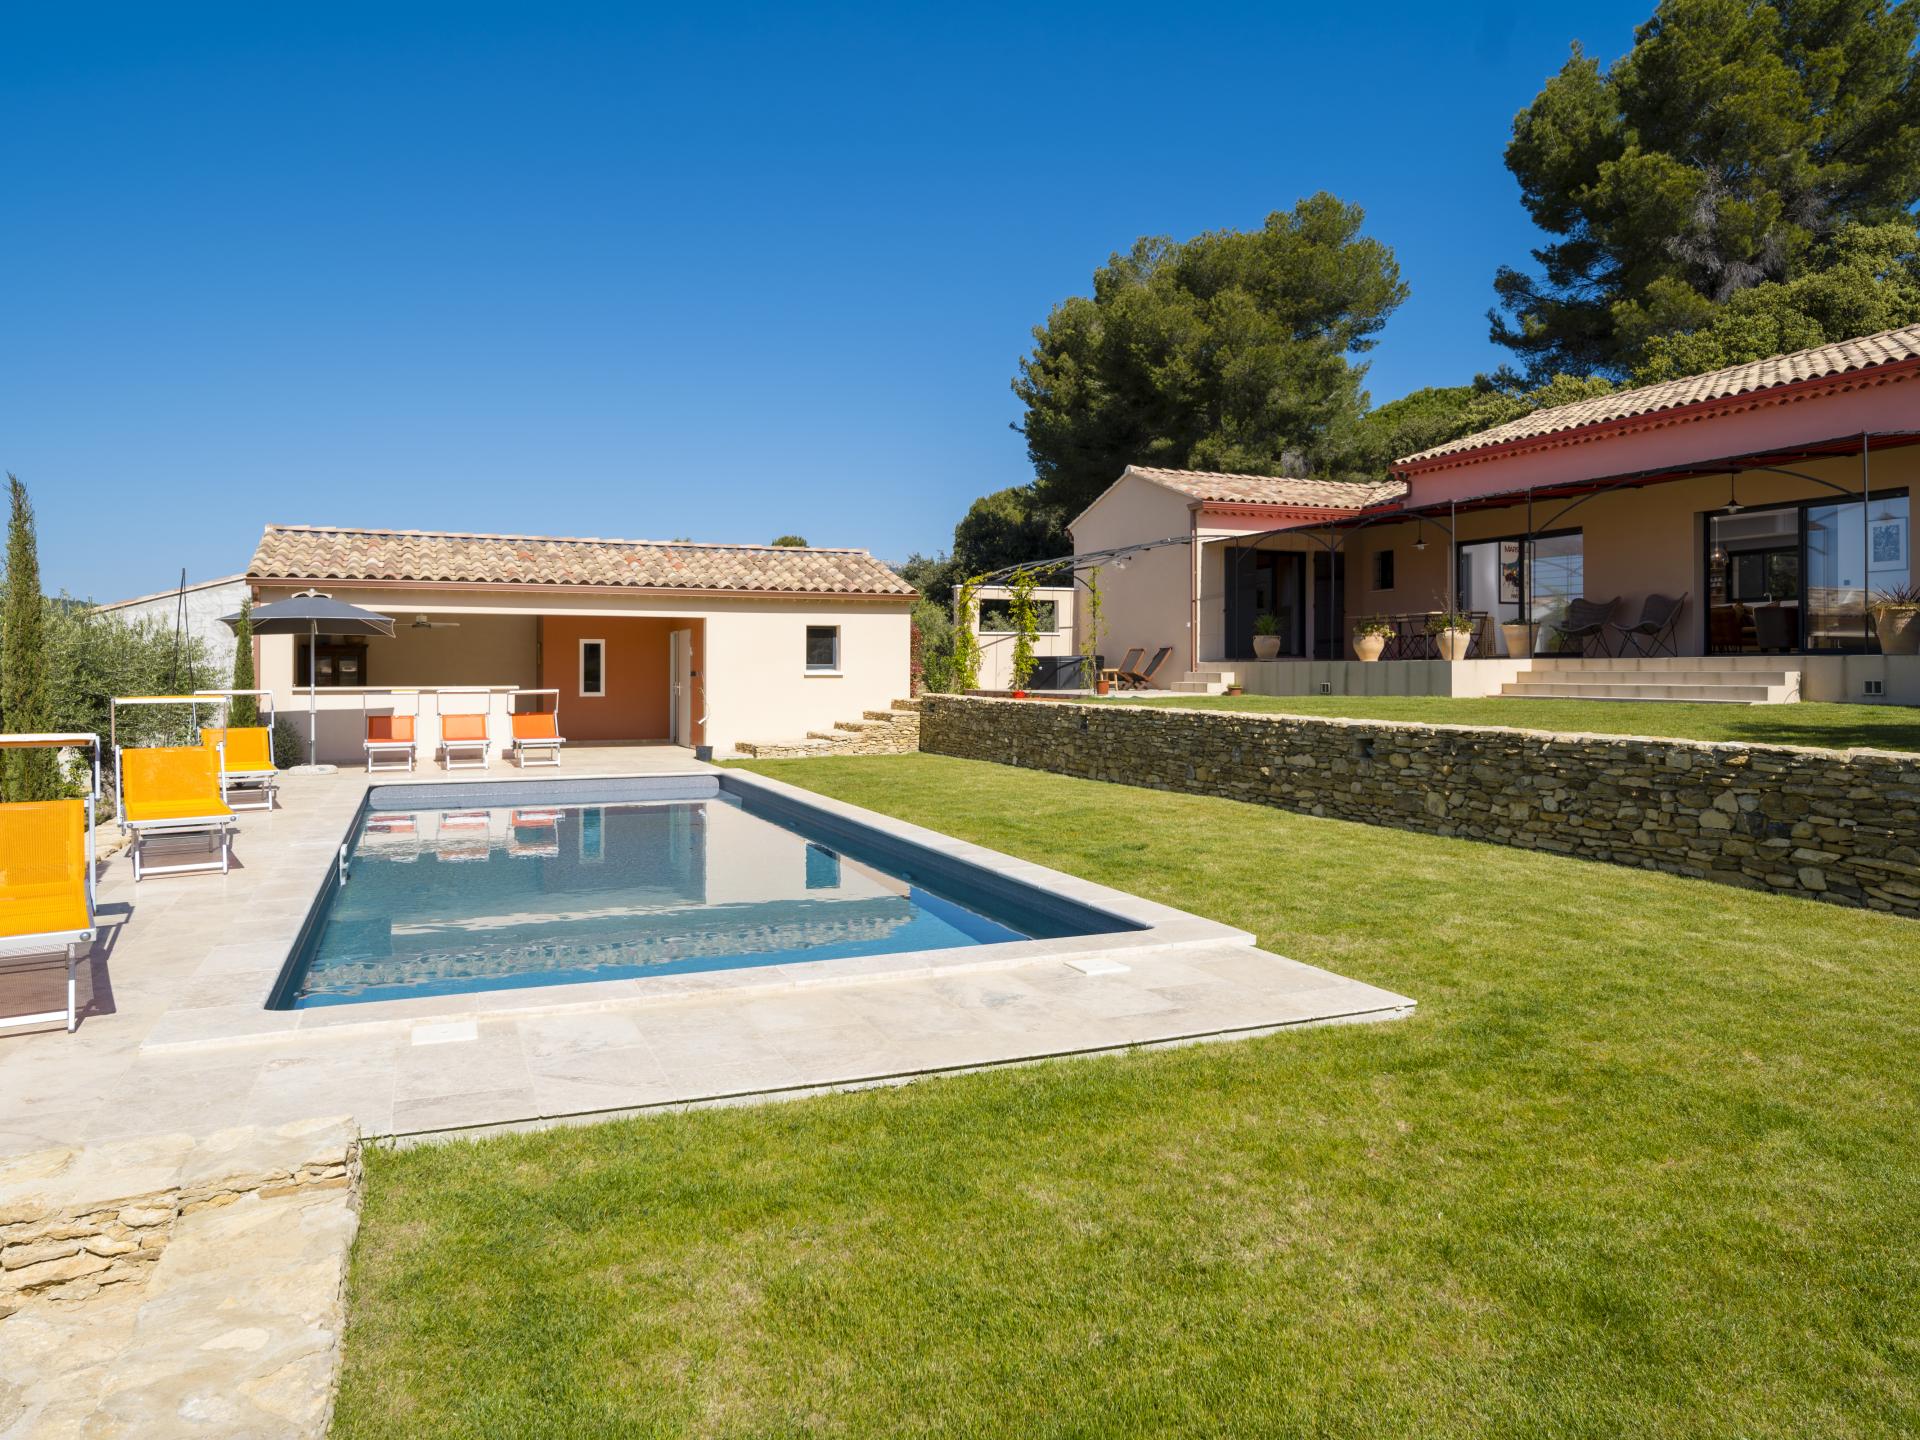 Villapparte-Villa for You-Villa Saint Véran-Luxe vakantiehuis voor 8 personen-Vaucluse-Provence-Zuid-Frankrijk